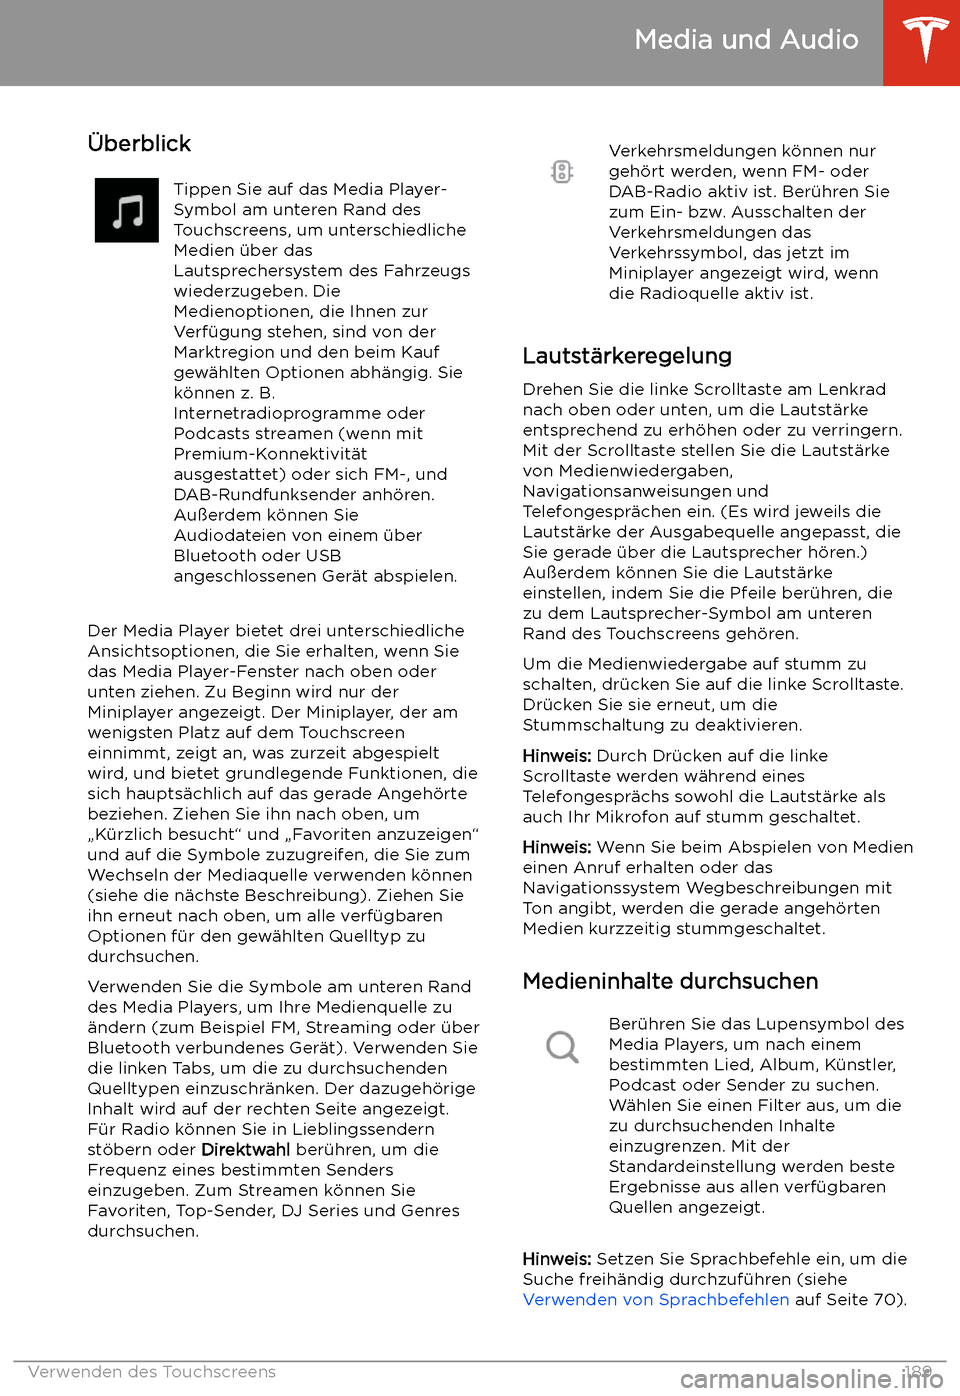 TESLA MODEL X 2020  Betriebsanleitung (in German) Media und Audio
